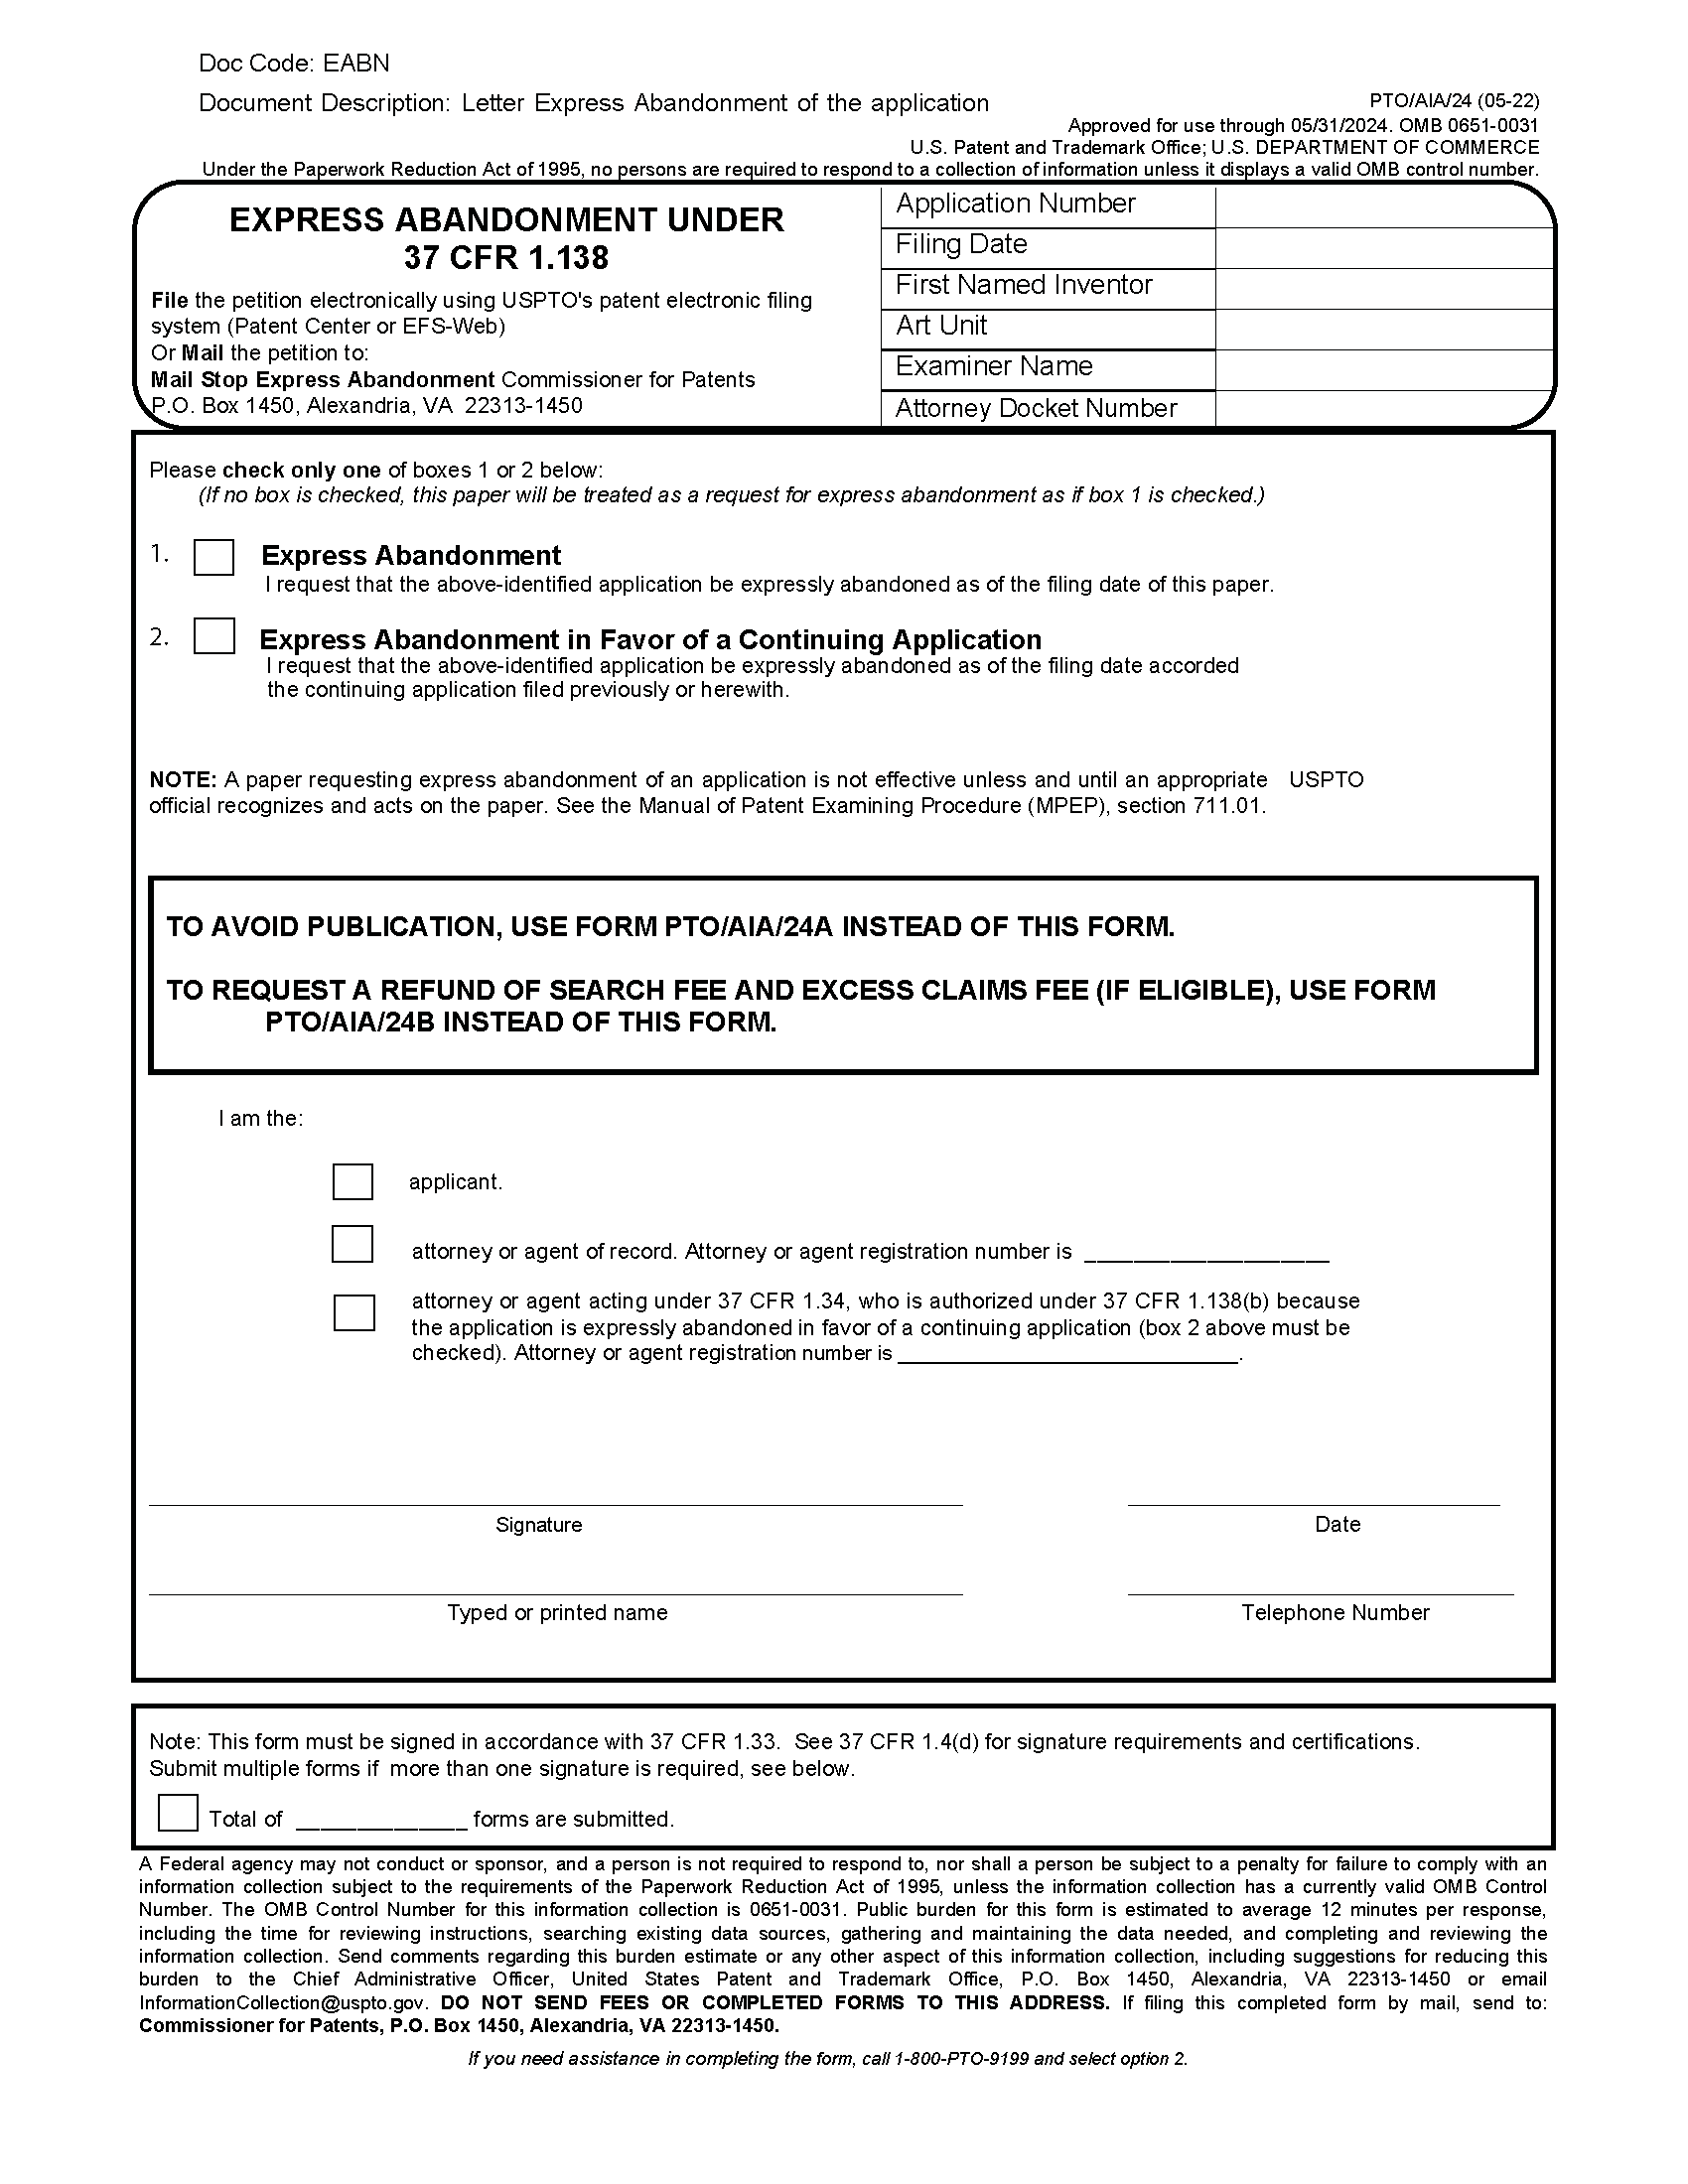 Form PTO/SB/24. Express Abandonment Under 37 CFR 1.138